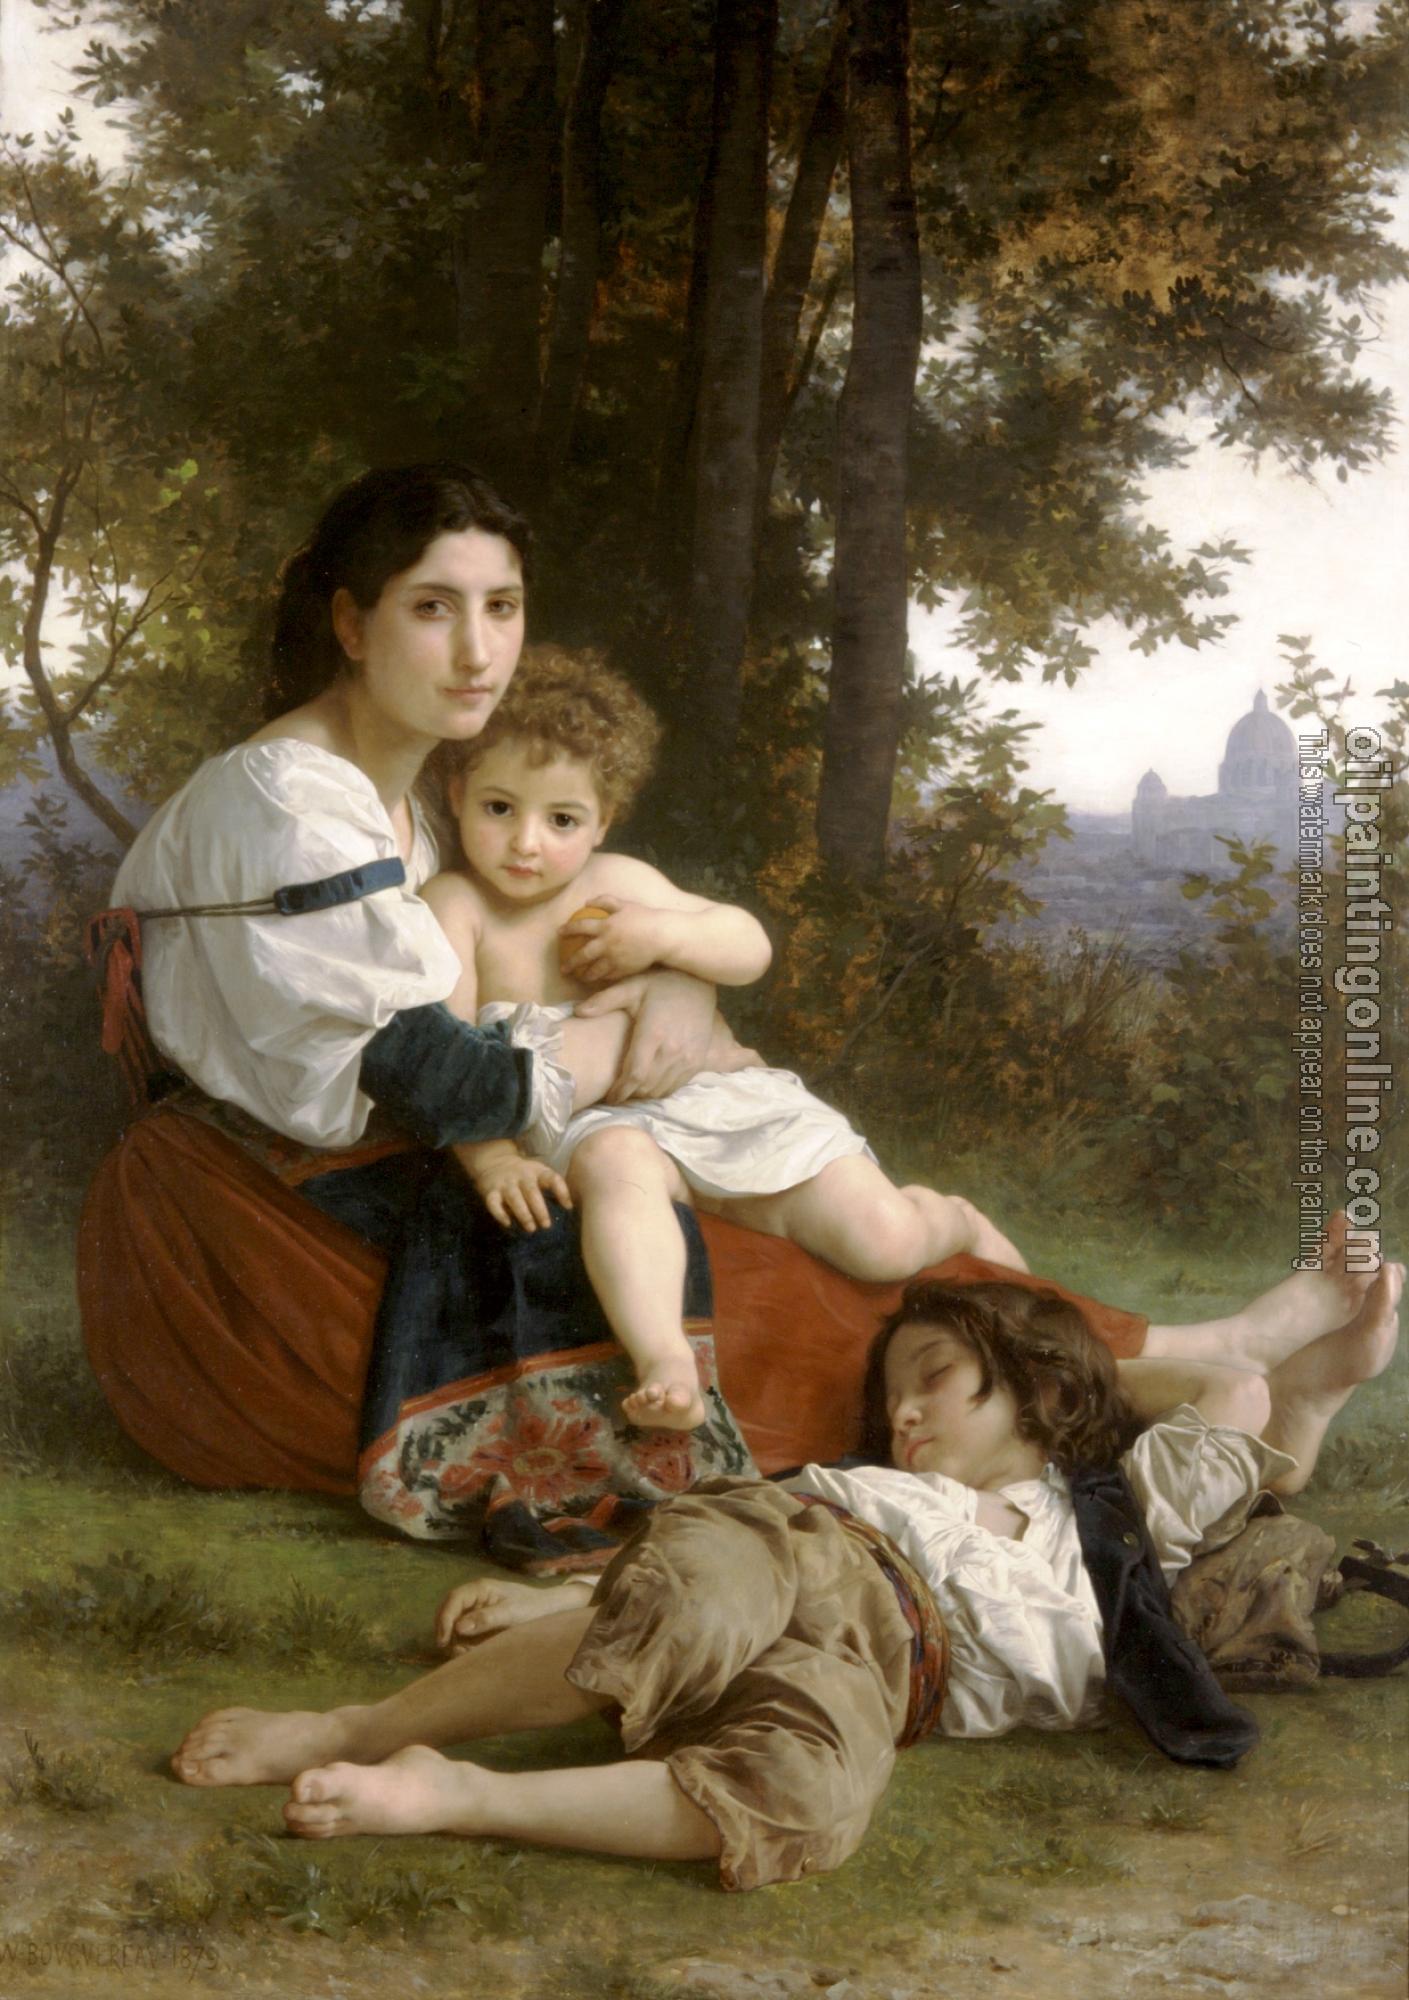 Bouguereau, William-Adolphe - Rest